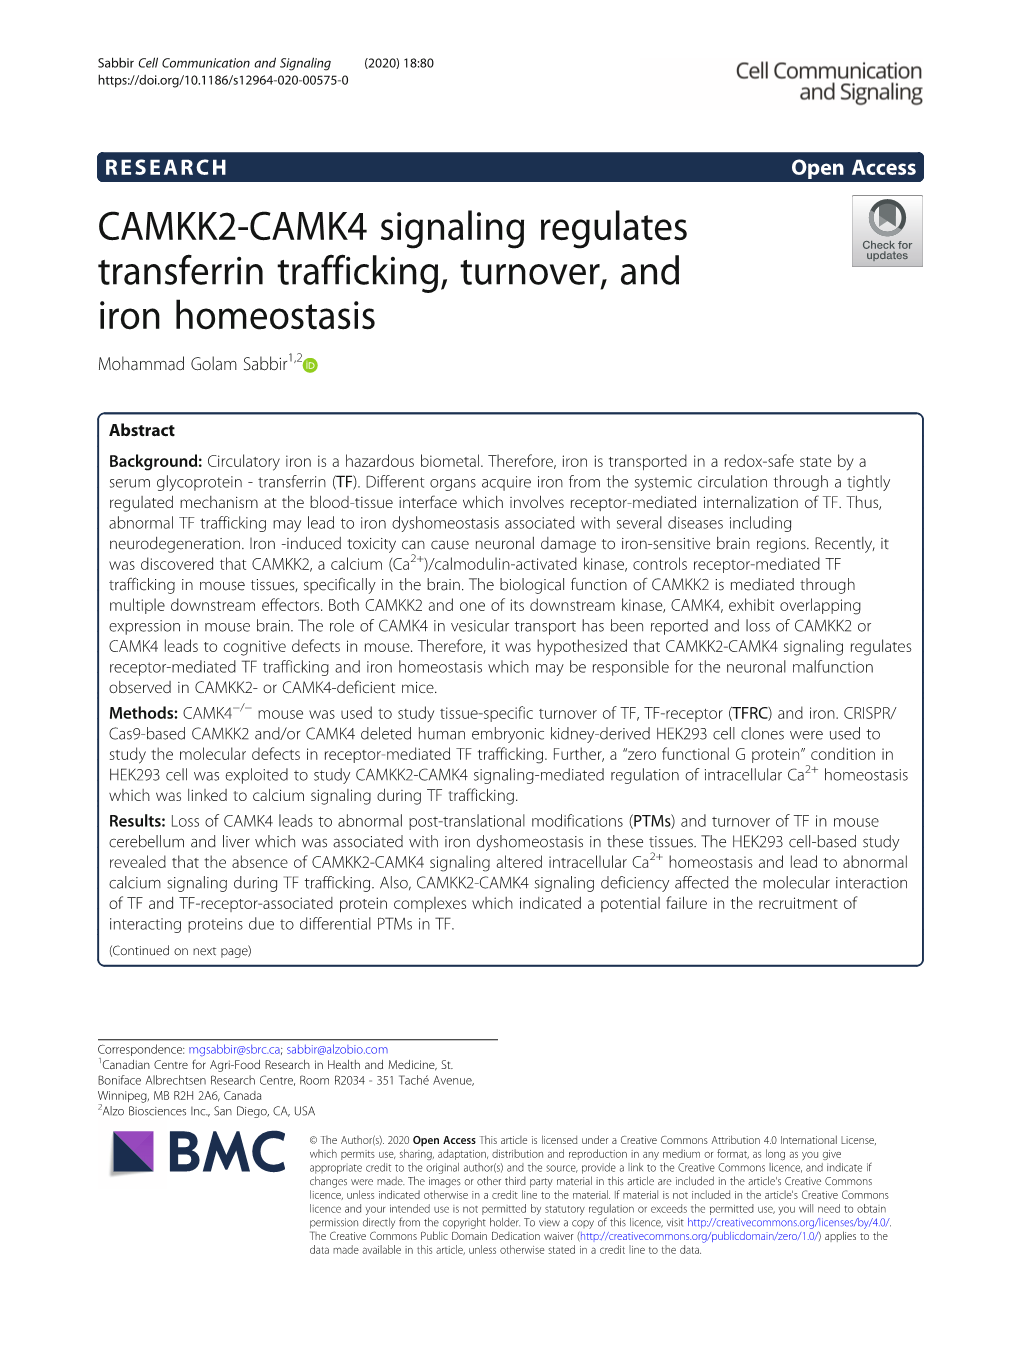 CAMKK2-CAMK4 Signaling Regulates Transferrin Trafficking, Turnover, and Iron Homeostasis Mohammad Golam Sabbir1,2